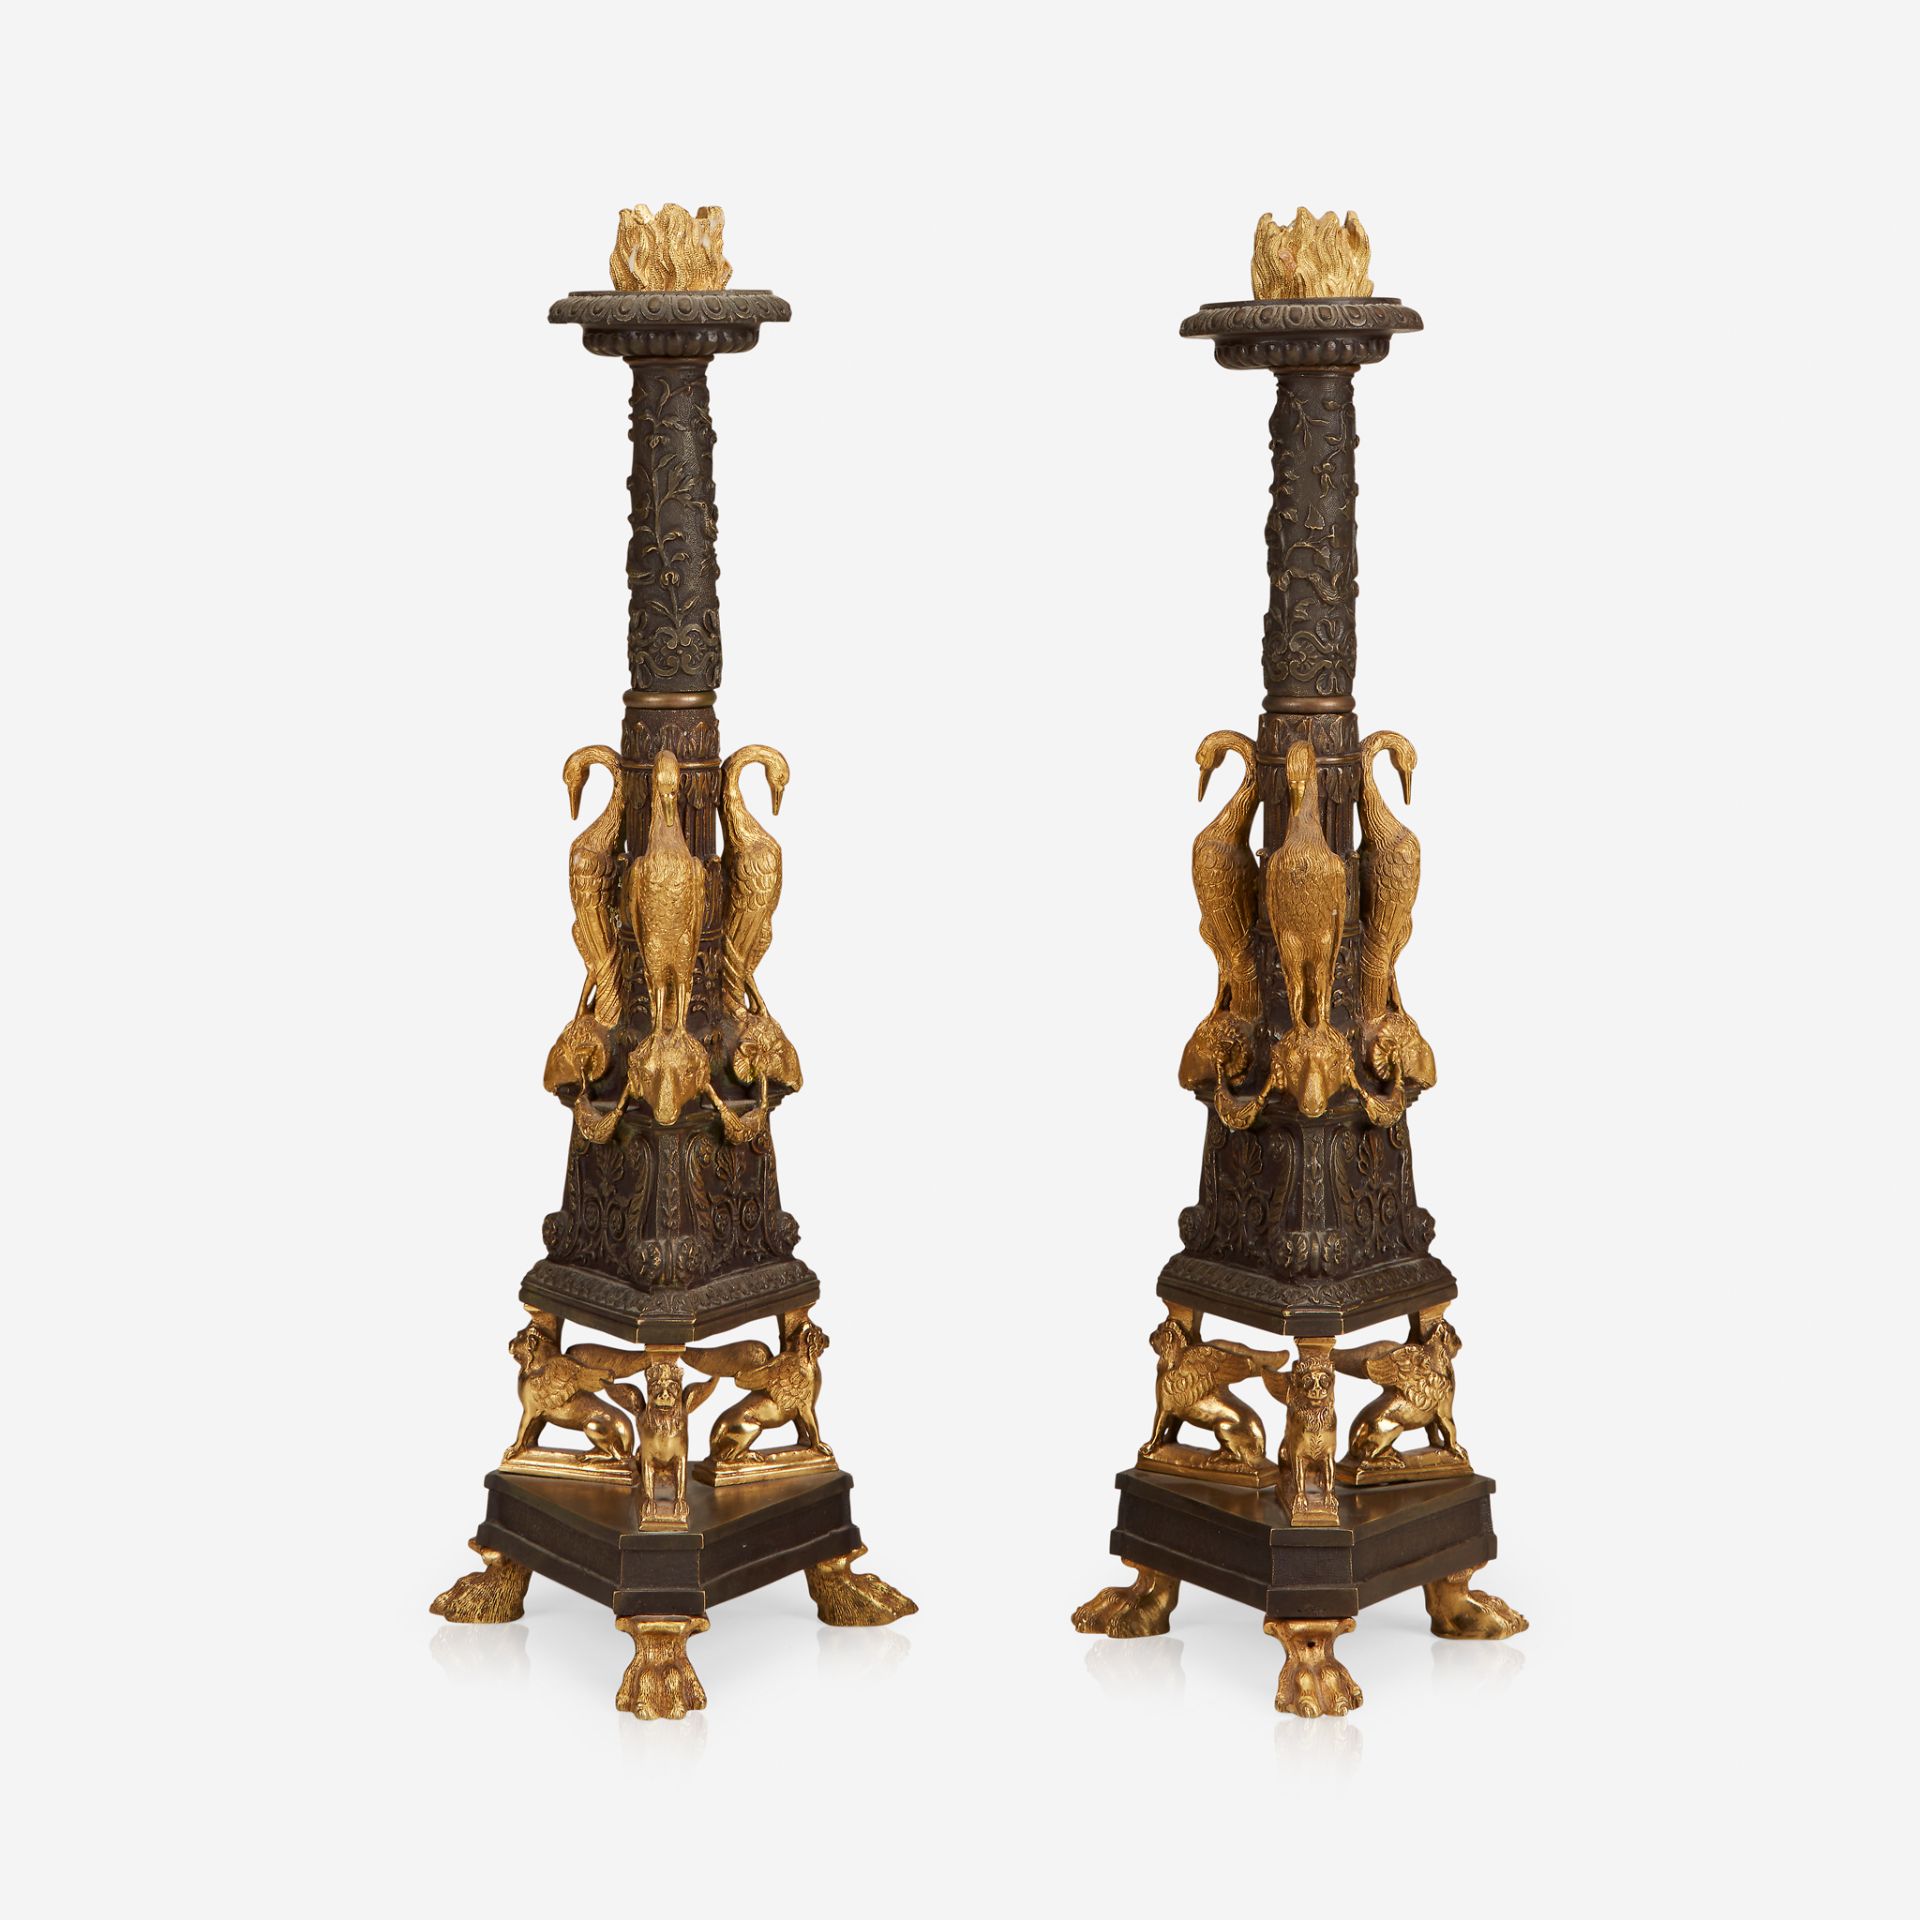 A pair of Empire Revival ormolu and patinated bronze candlesticks, Circa 1880